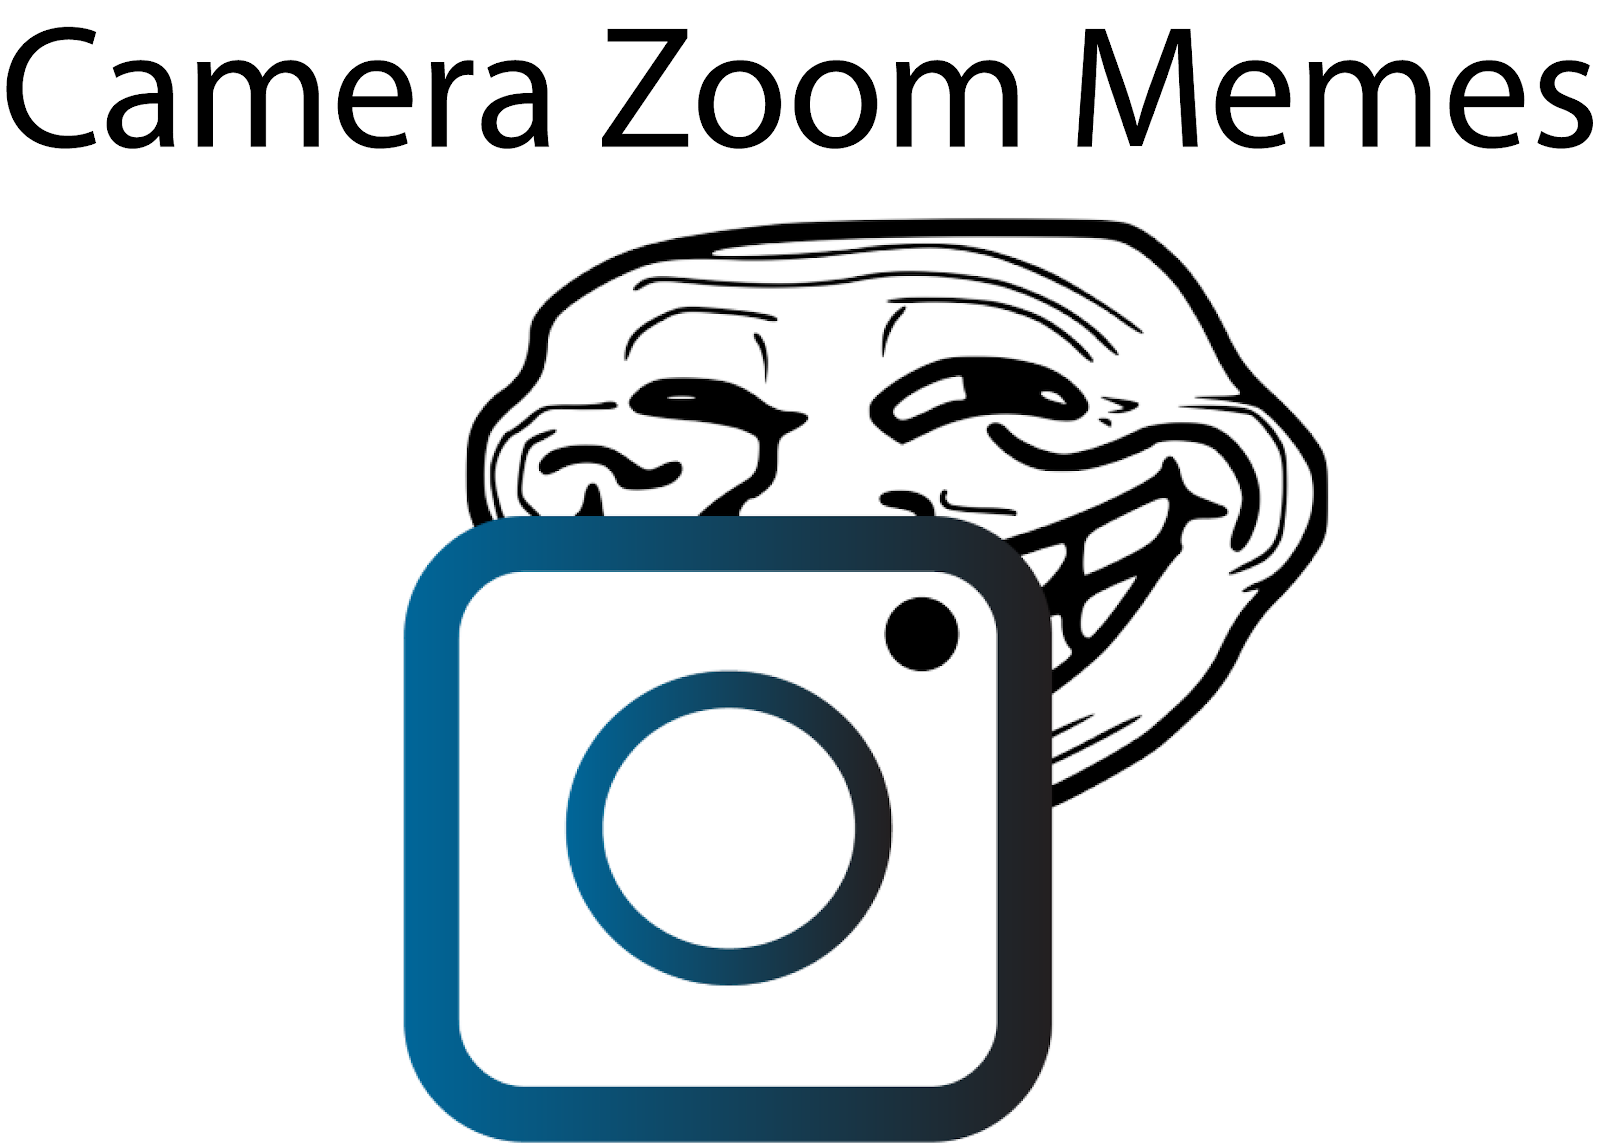 Camera Zoom Memes